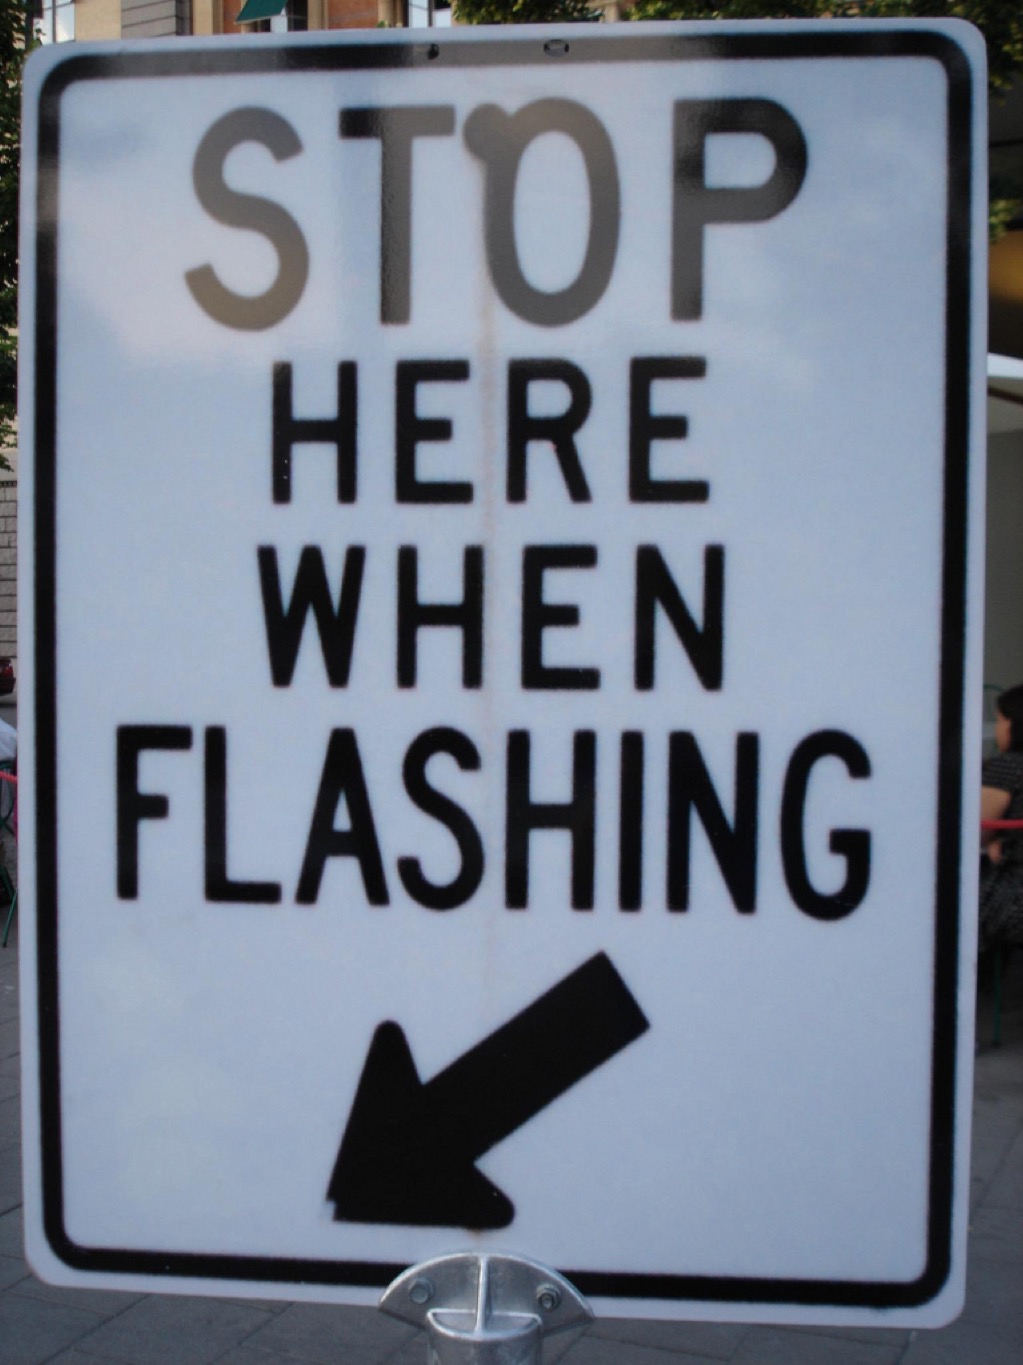 Flashing Road Warning Signs